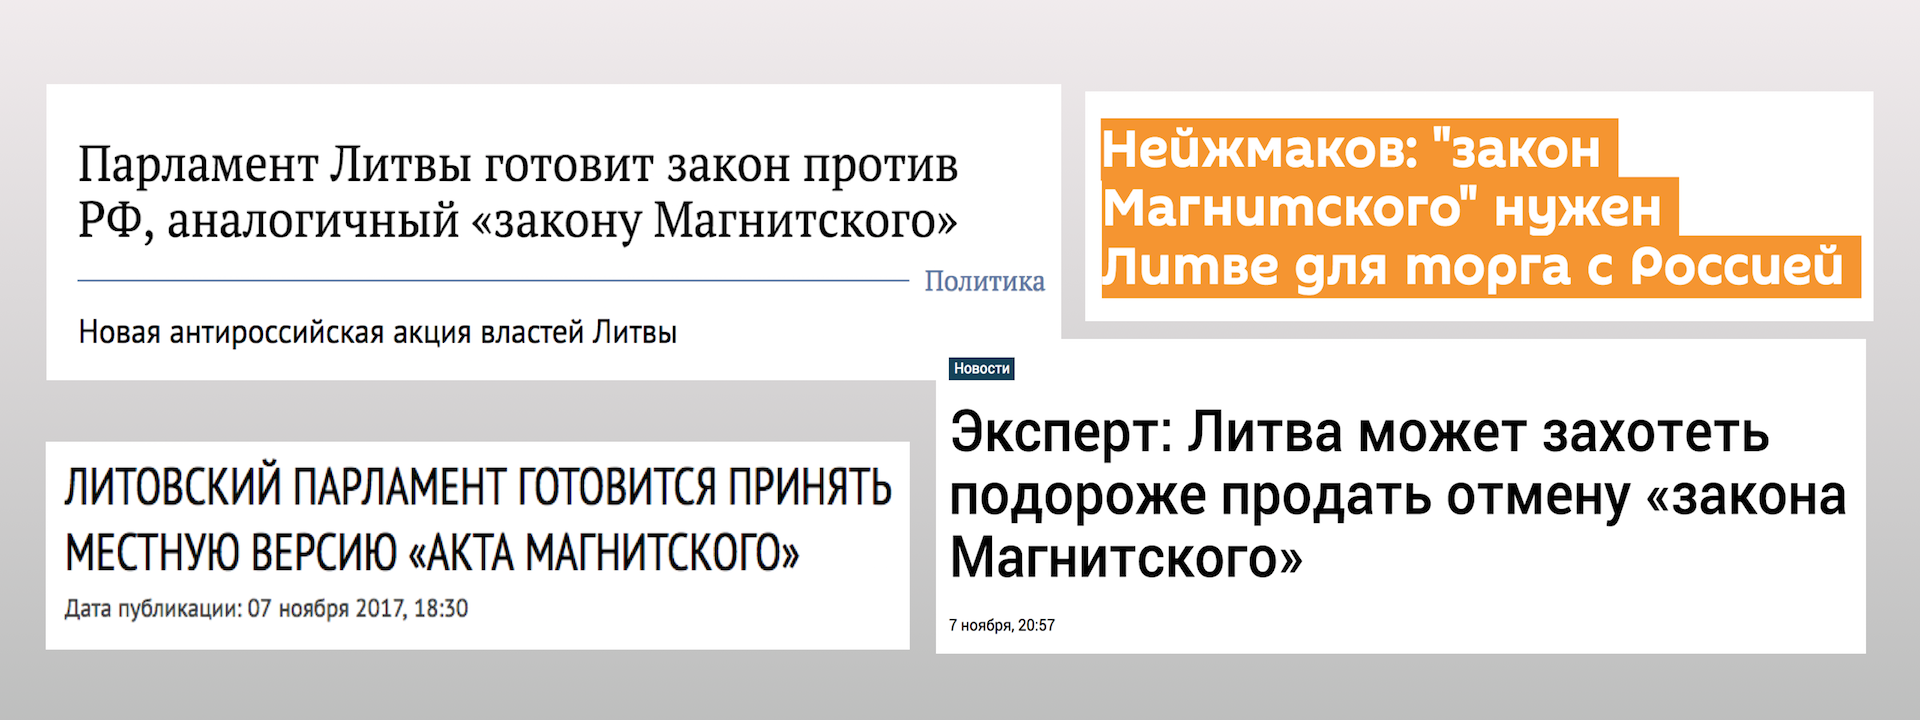 Kremlin Media Mobilizes Against Magnitsky Act in Lithuania